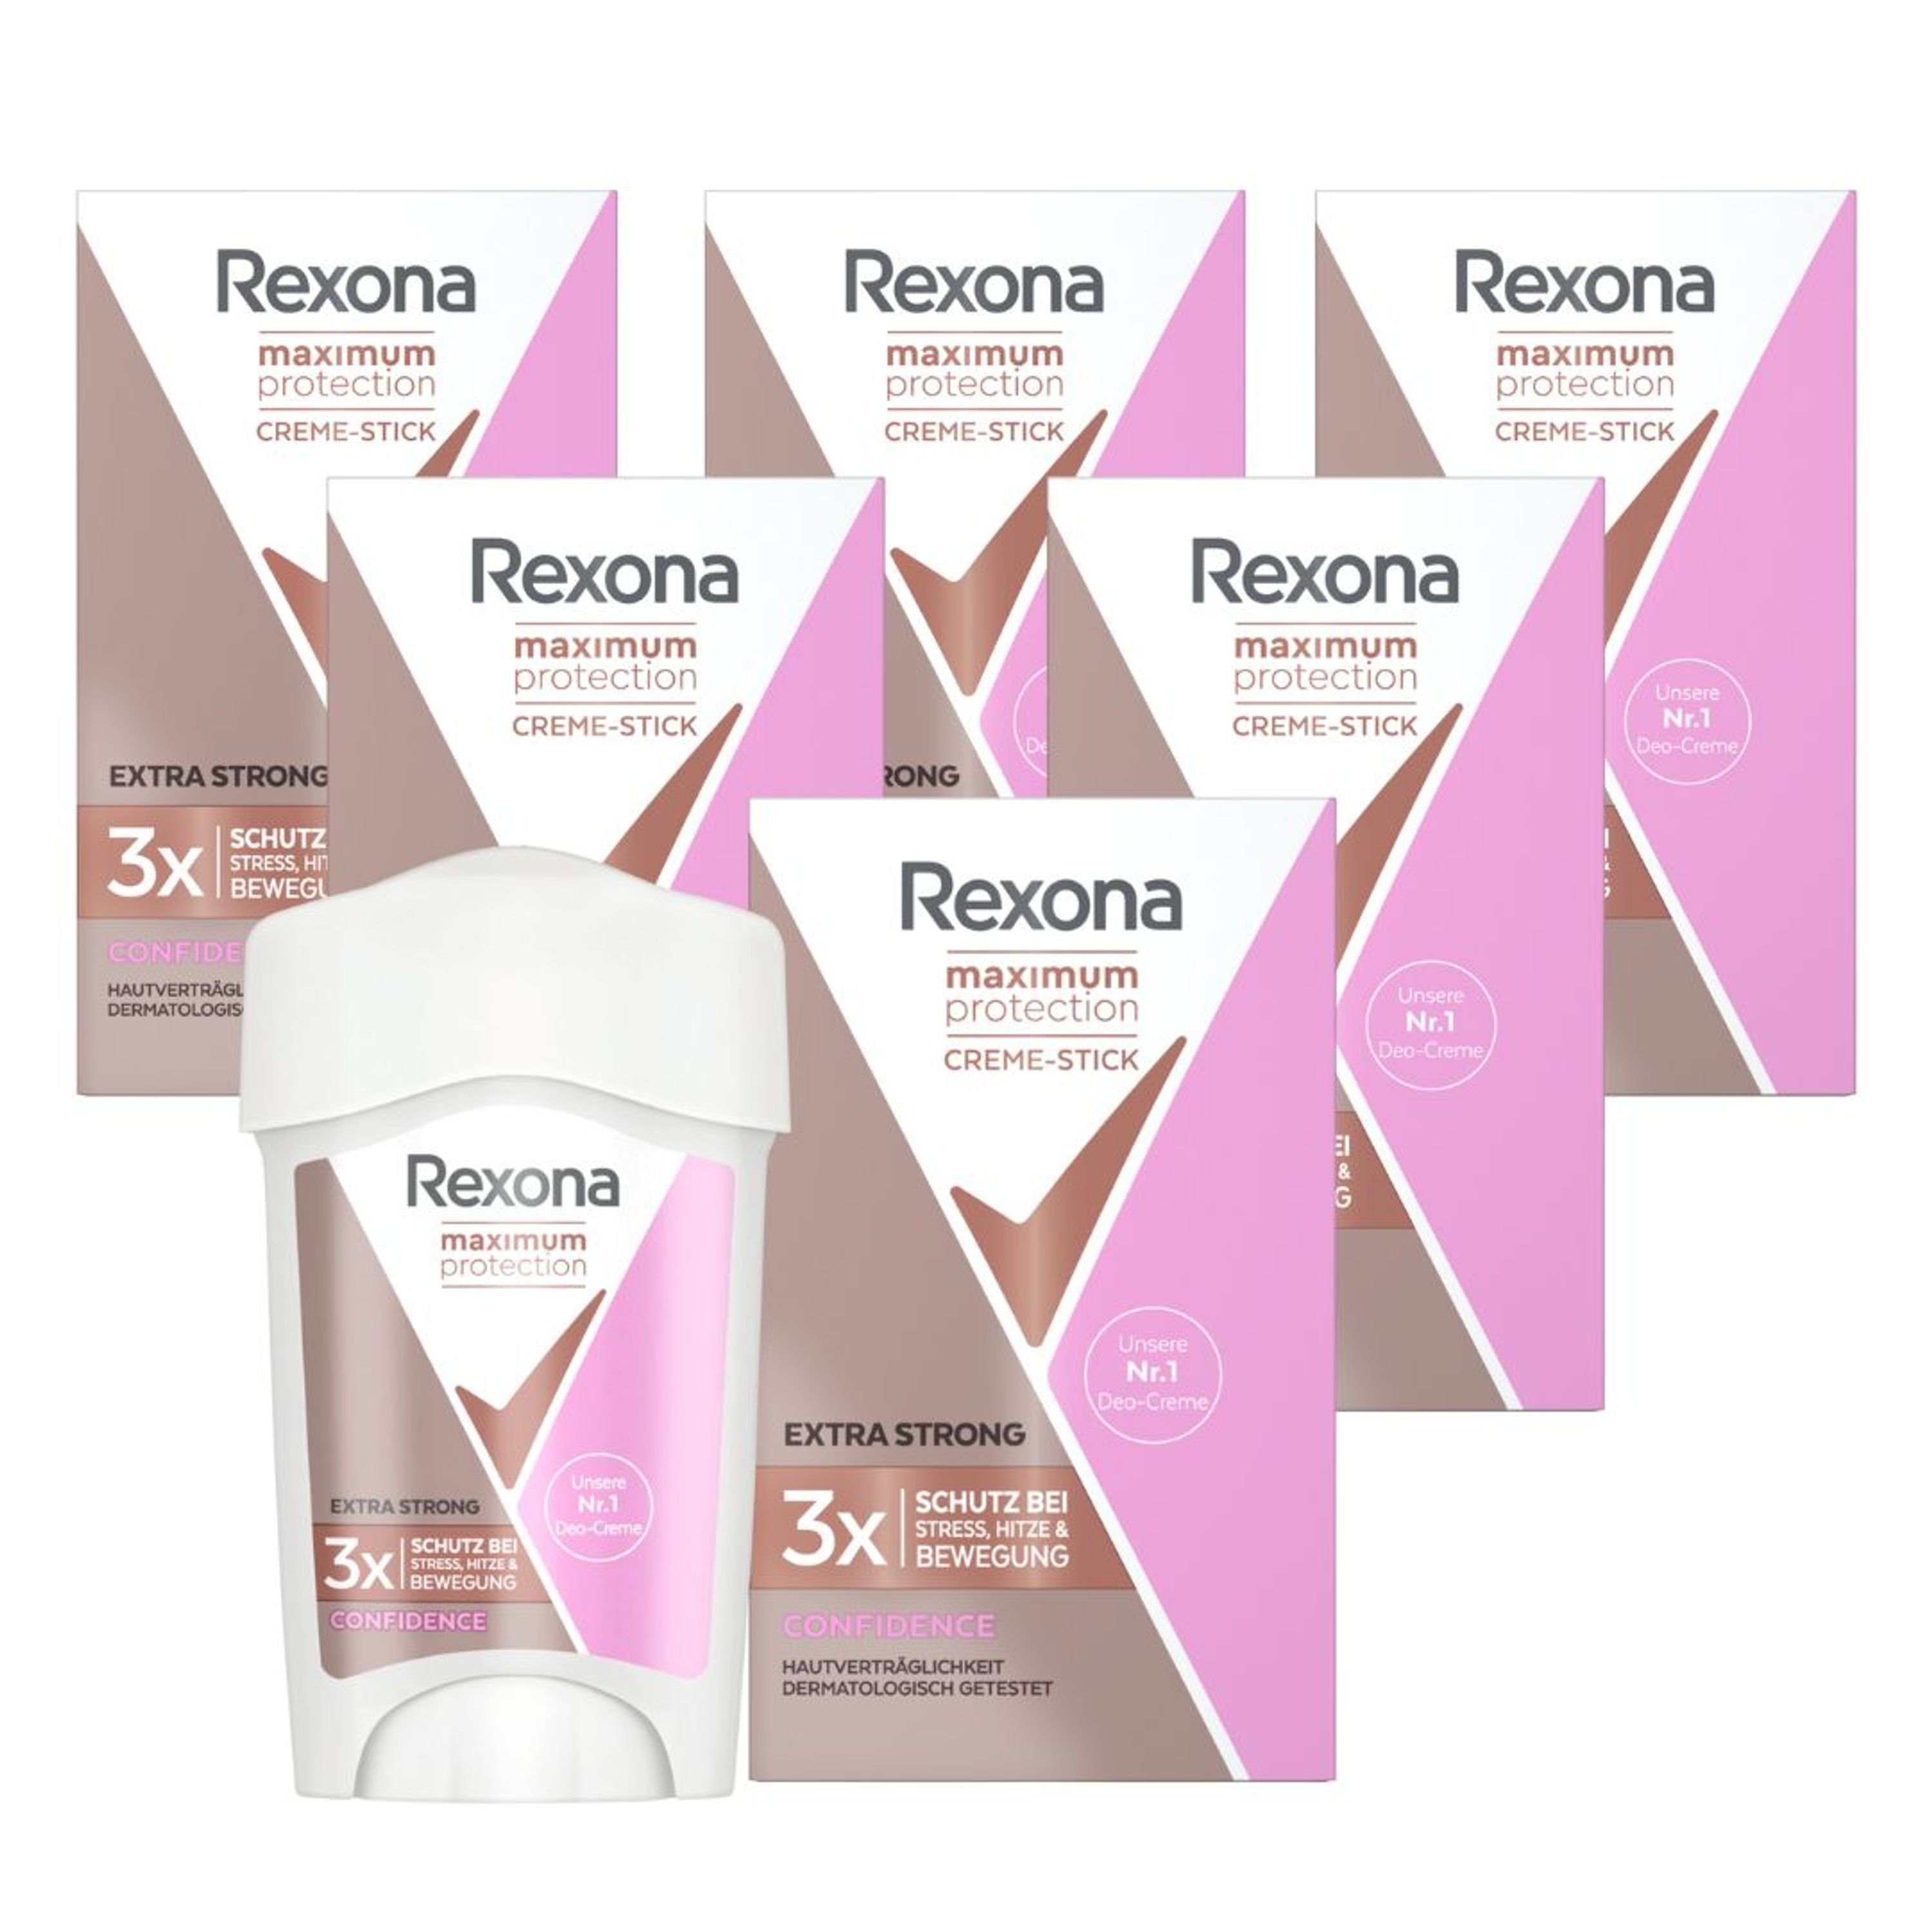 Rexona Deo-Set Maximum Protection Transpirant 6x45ml Deo Creme Confidence Anti